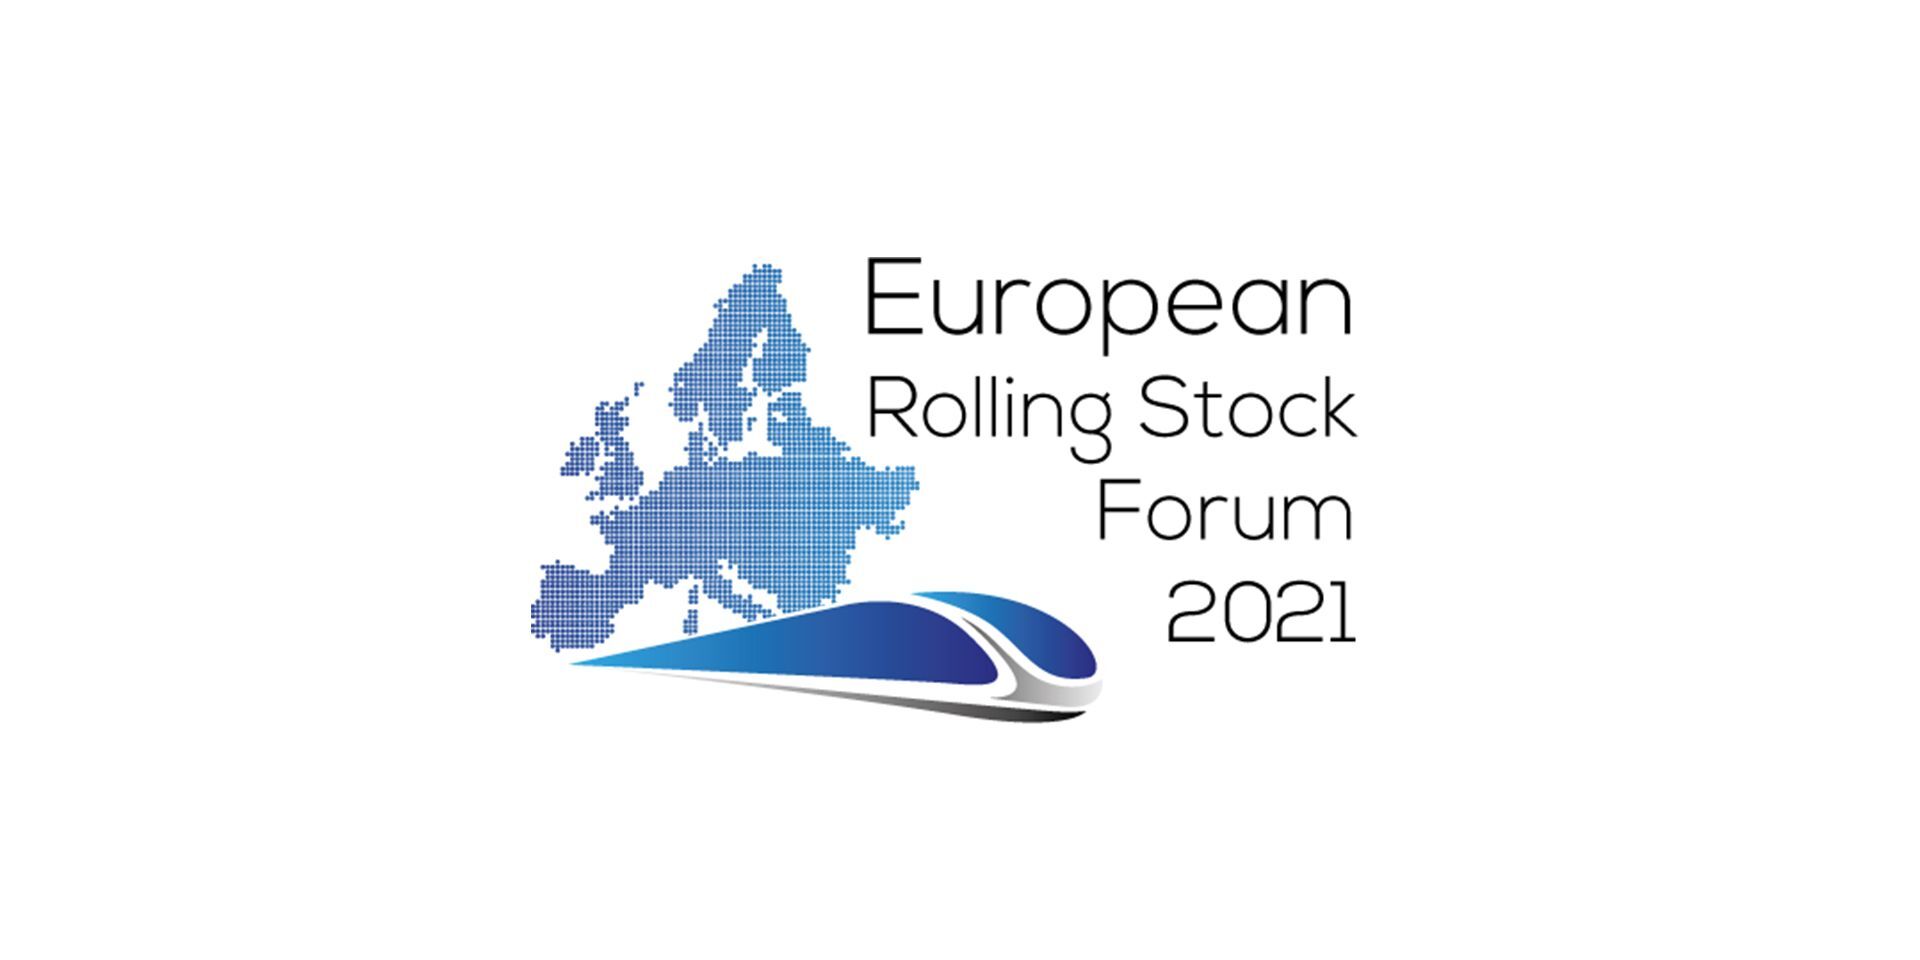 HANTON Szalc Zięba & Partners Law Firm present at the European Rolling Stock Forum 2021